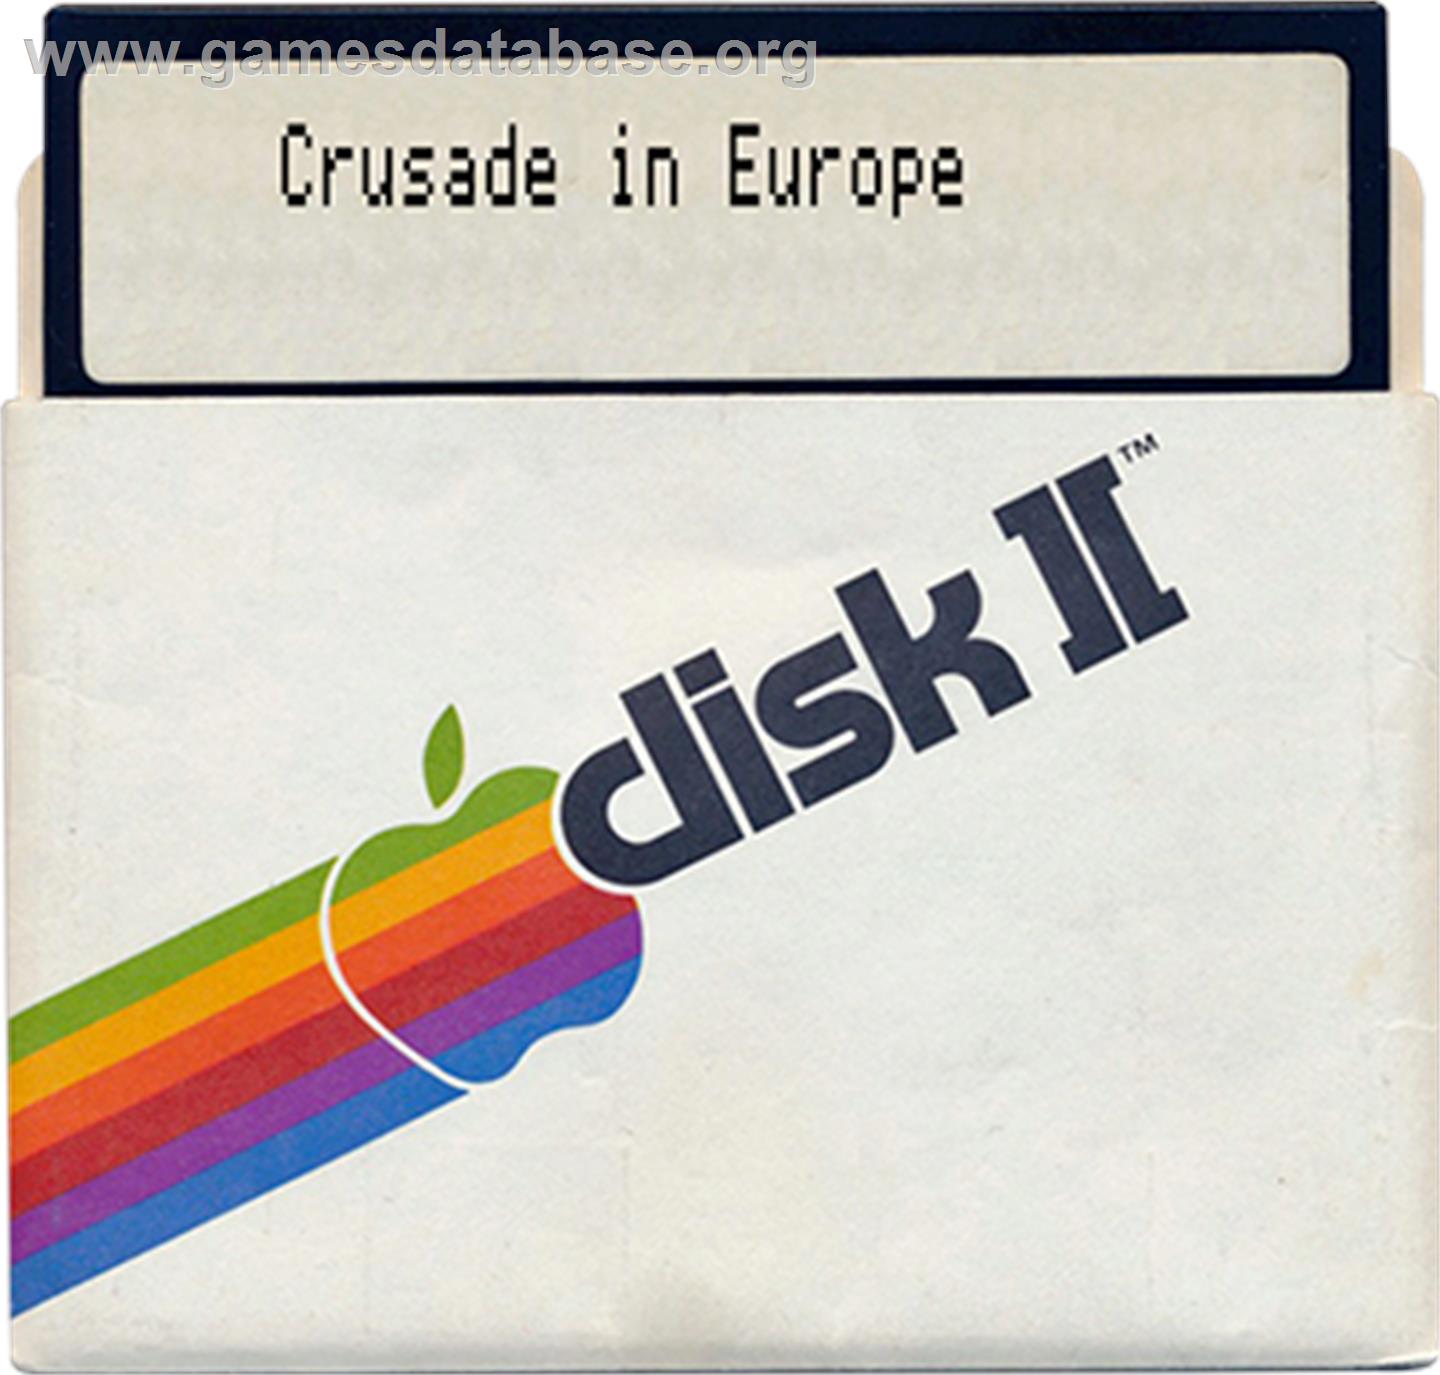 Crusade in Europe - Apple II - Artwork - Disc